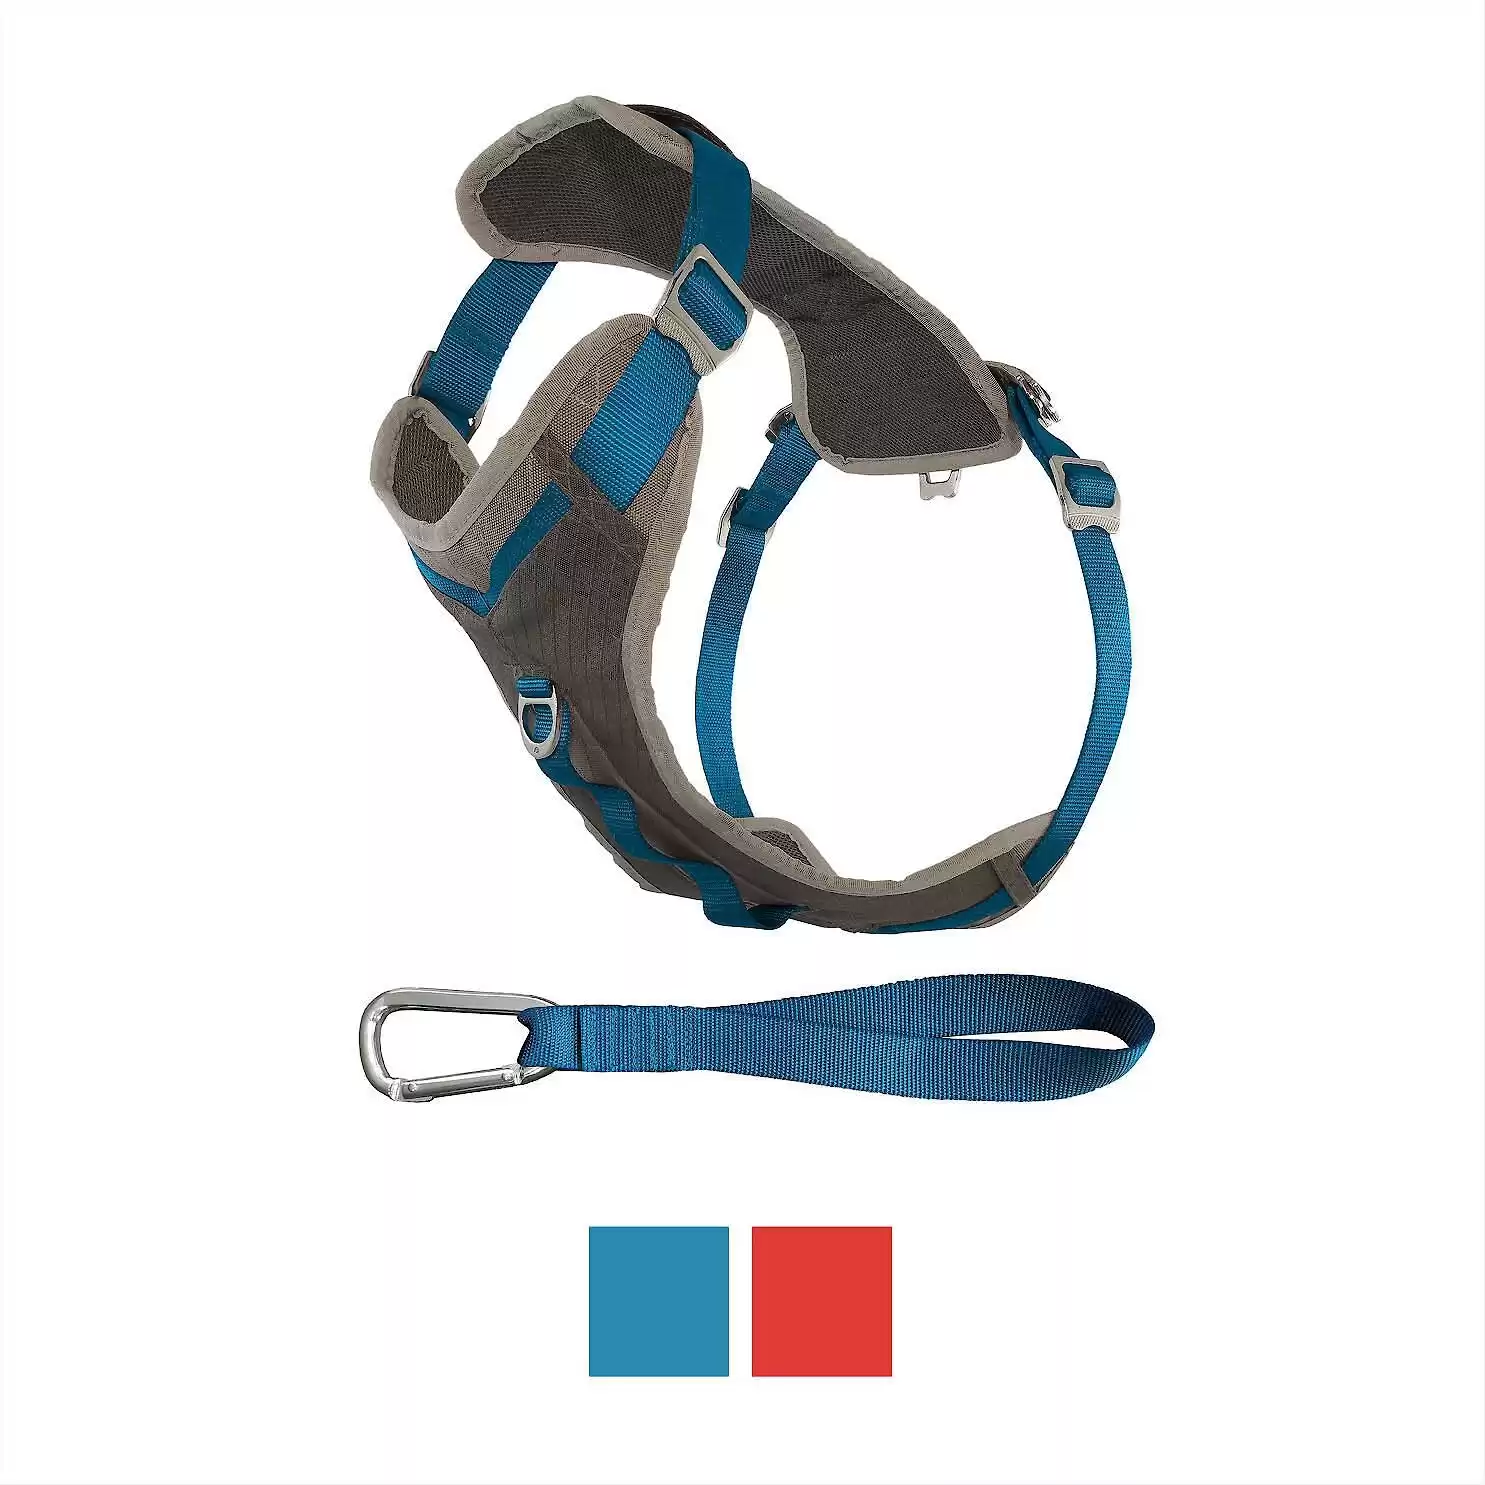 Kurgo Journey Multi-Use Dog Harness